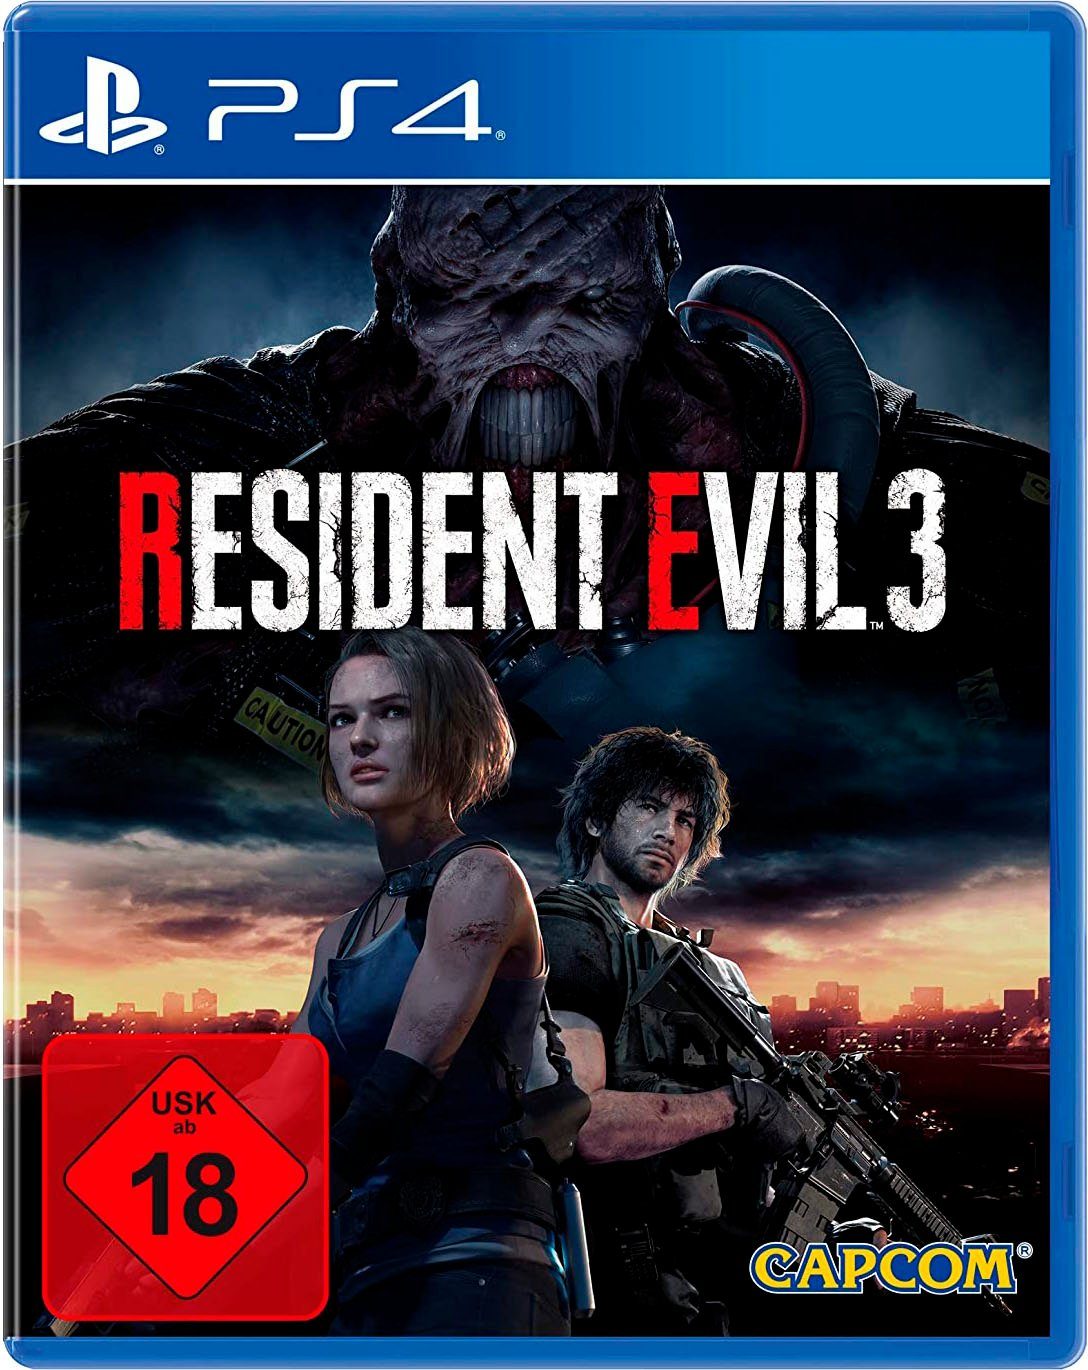 PS4 Capcom 3 PlayStation 4 Resident Evil